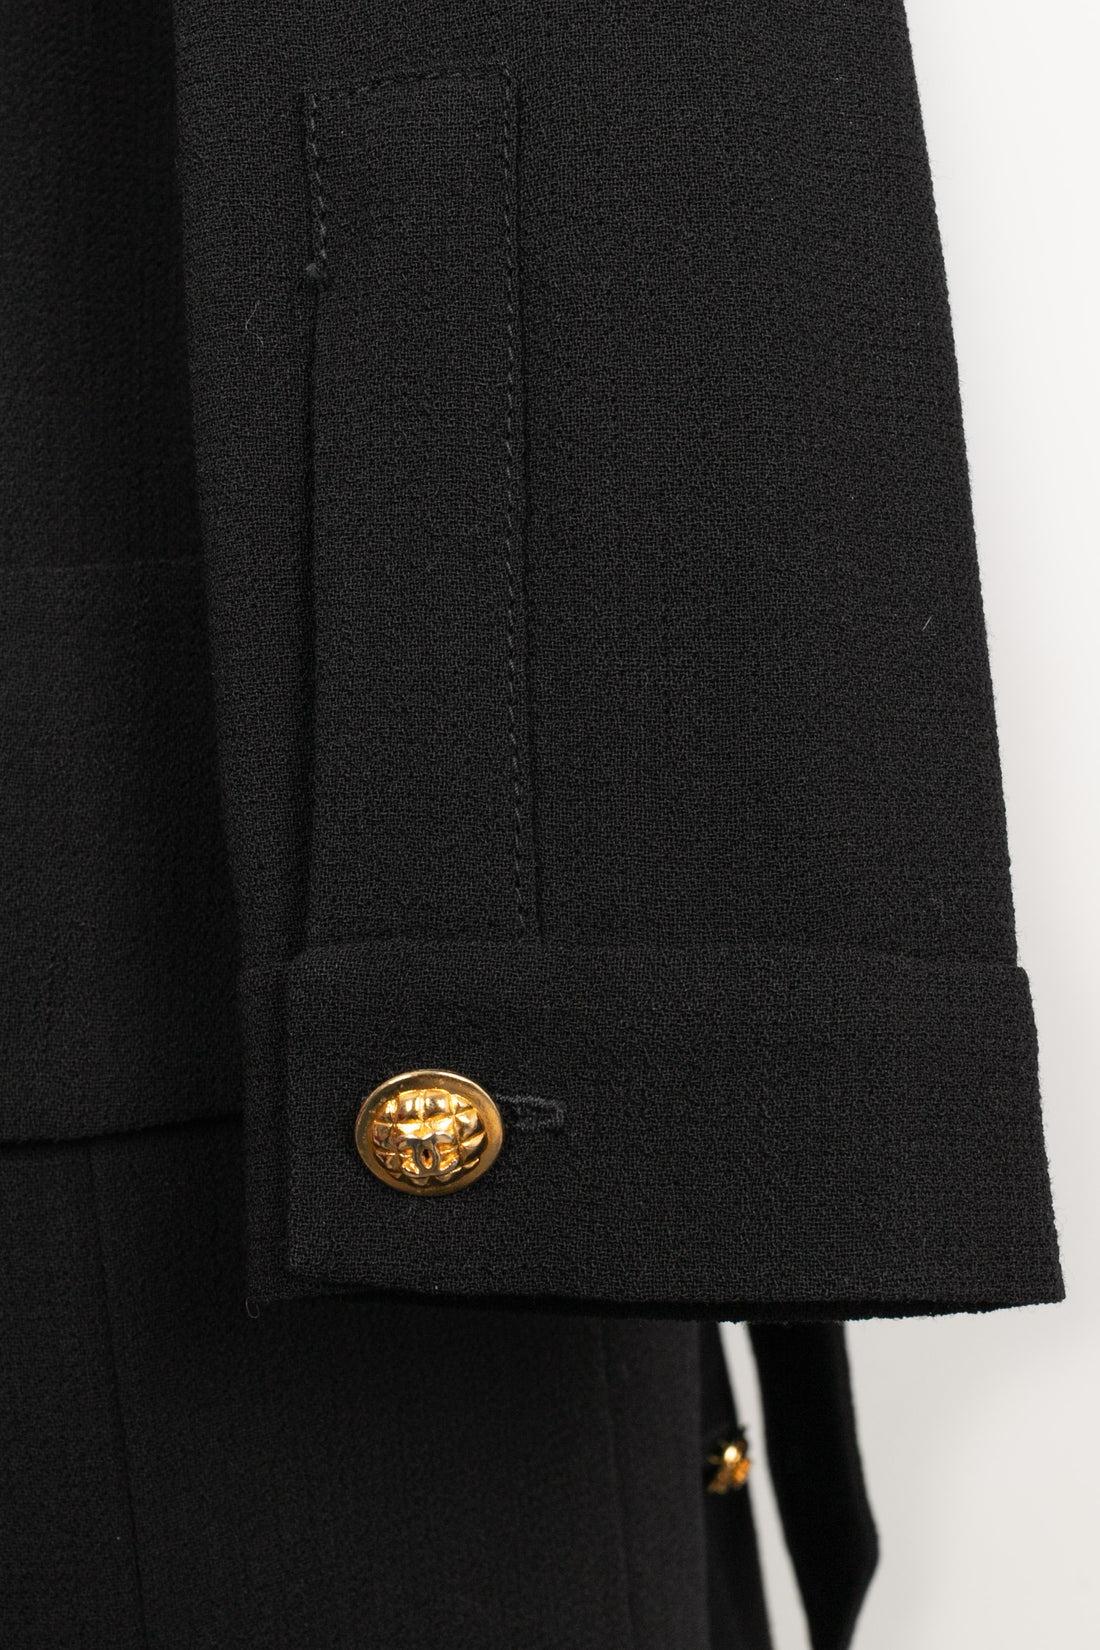 Chanel Long-Sleeved Black Dress, 1980S For Sale 4